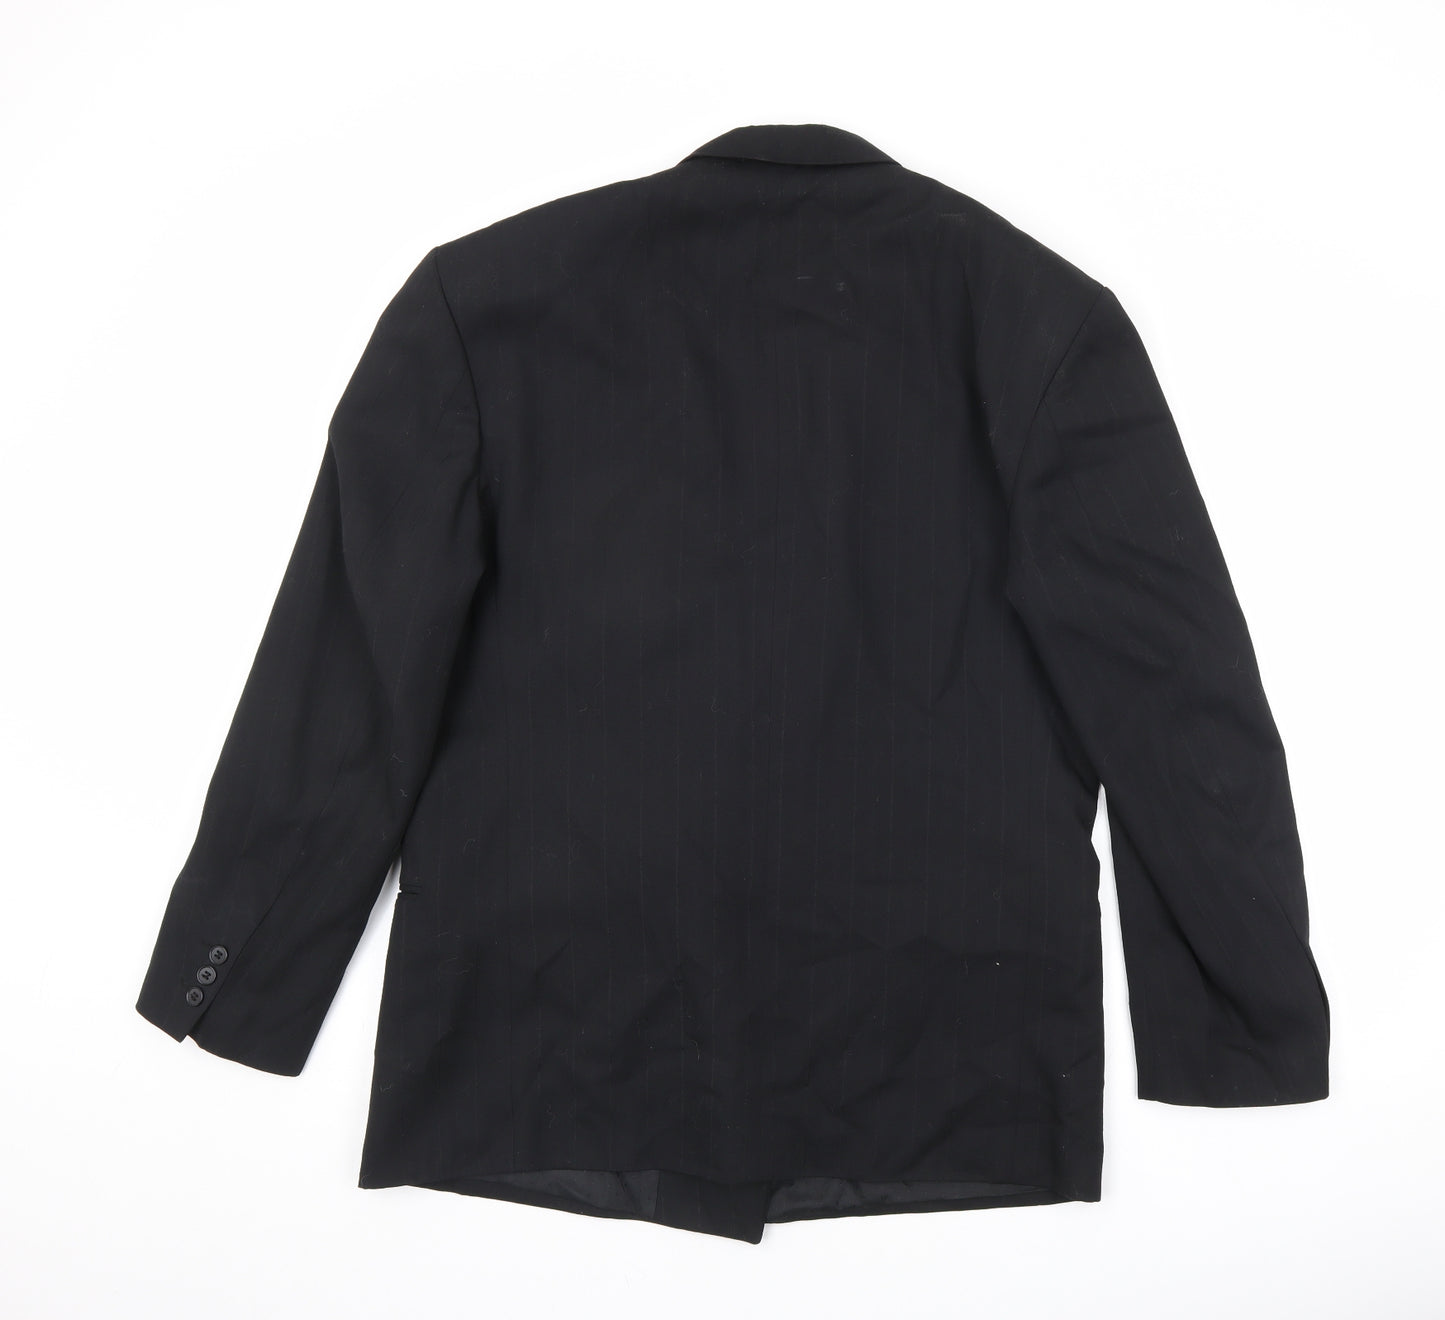 Cormann Mens Black Striped Polyester Jacket Suit Jacket Size 40 Regular